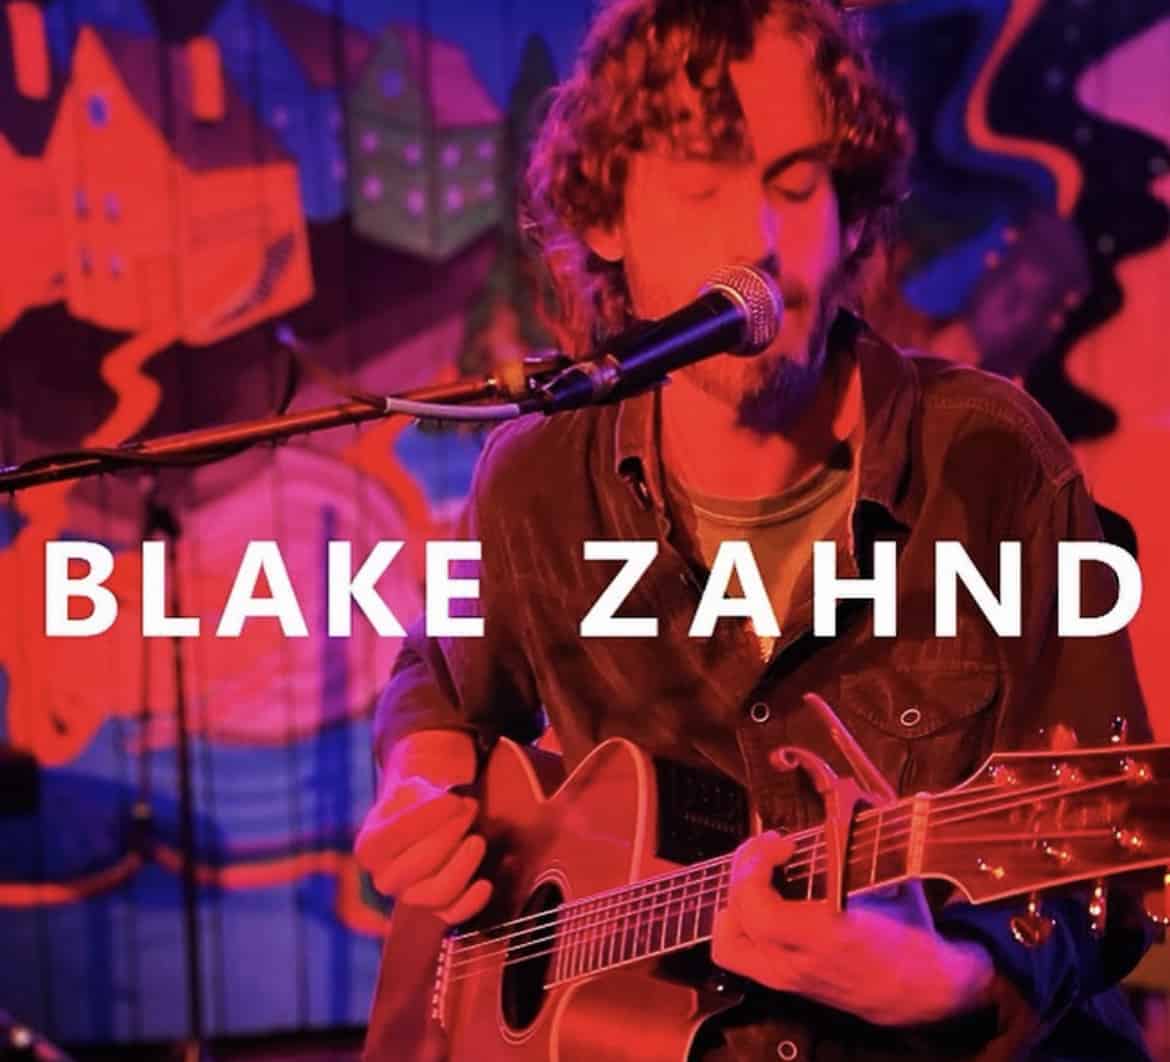 Blake Zahnd